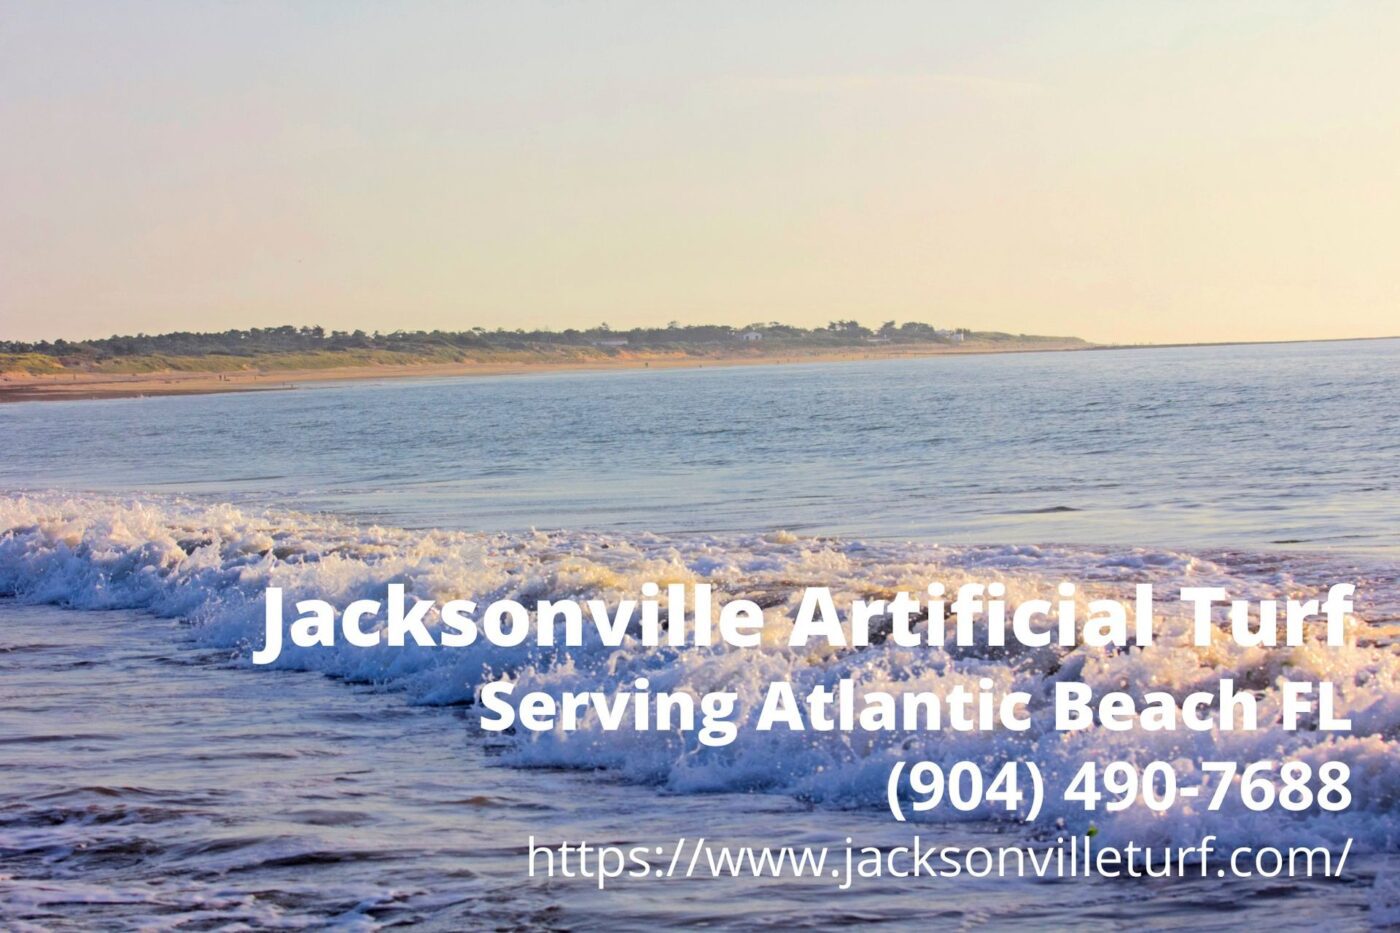 business details of Jacksonville Artificial Turf - a turf installer serving Atlantic Beach FL